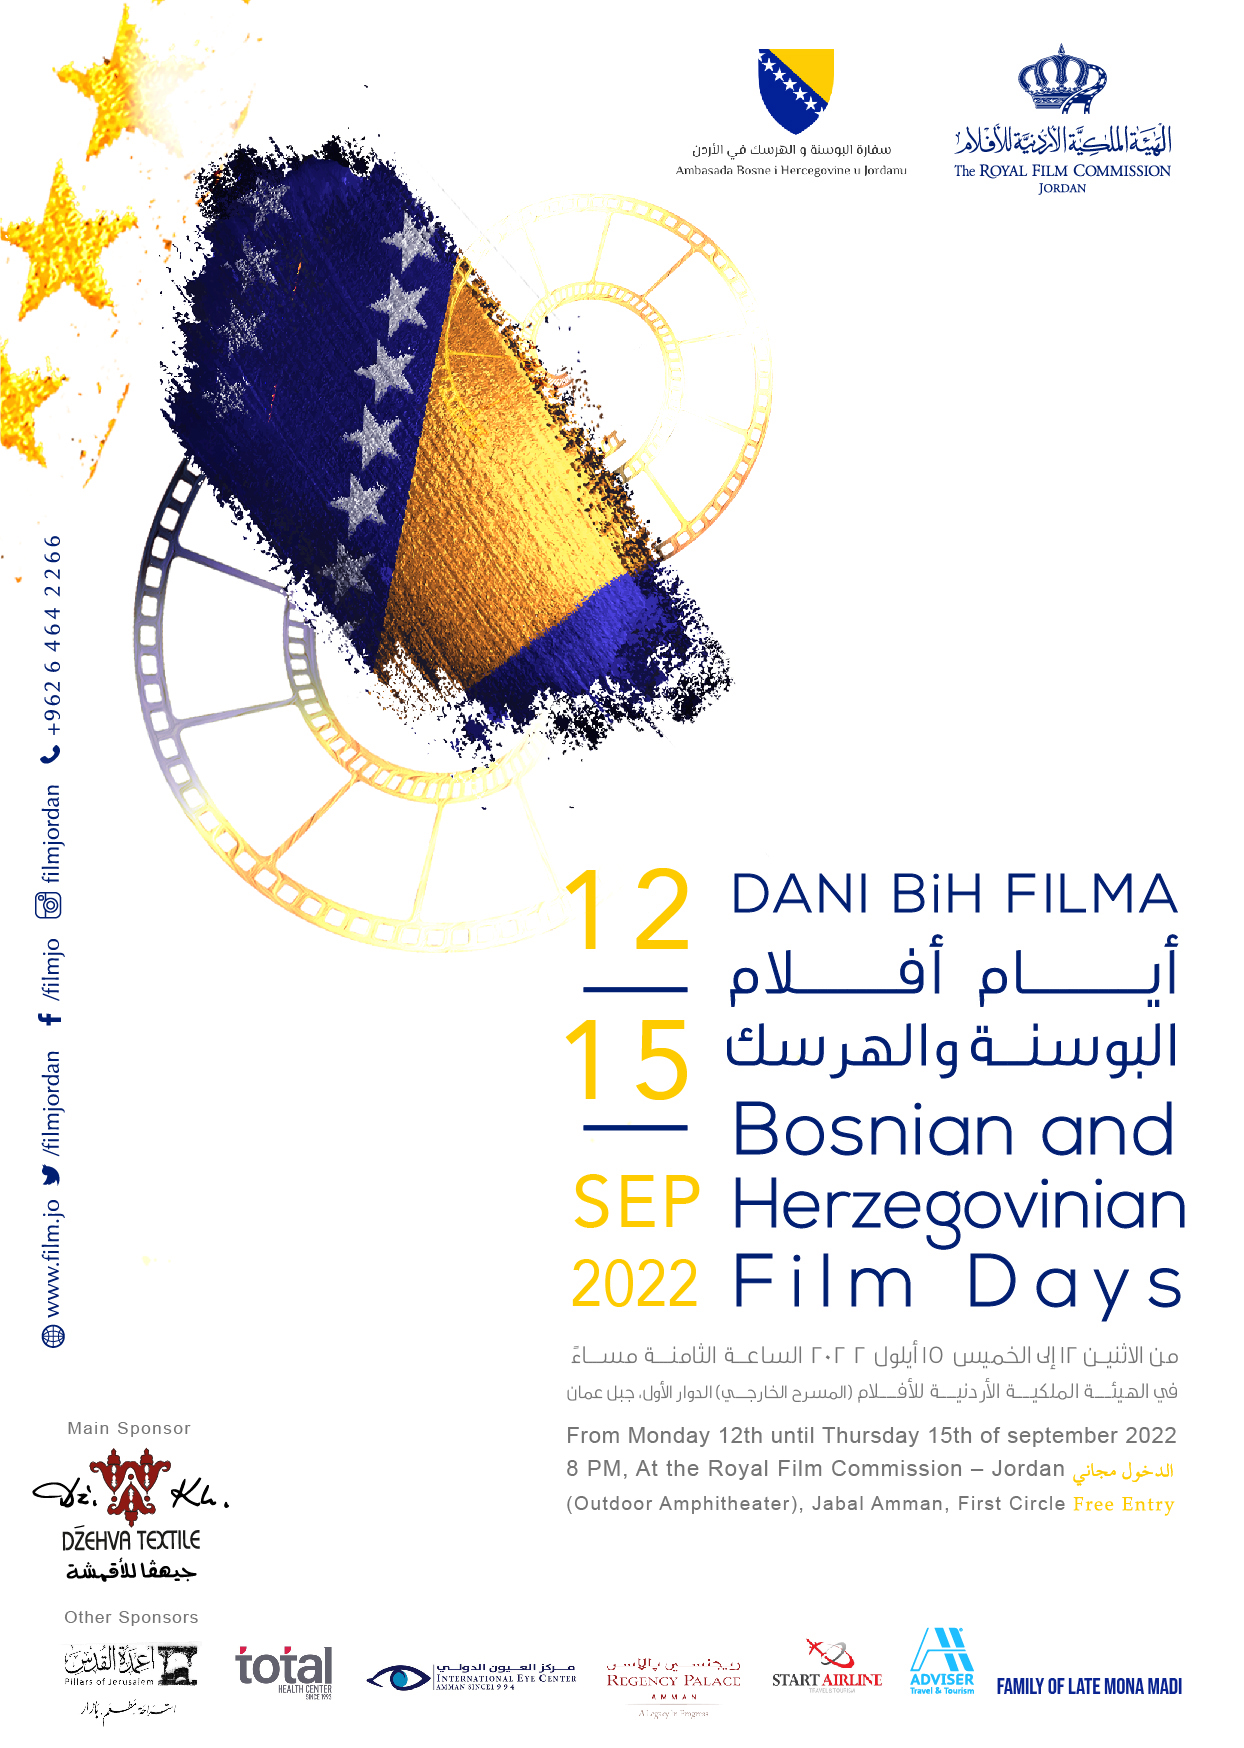 Bosnian and Herzegovinian film days 